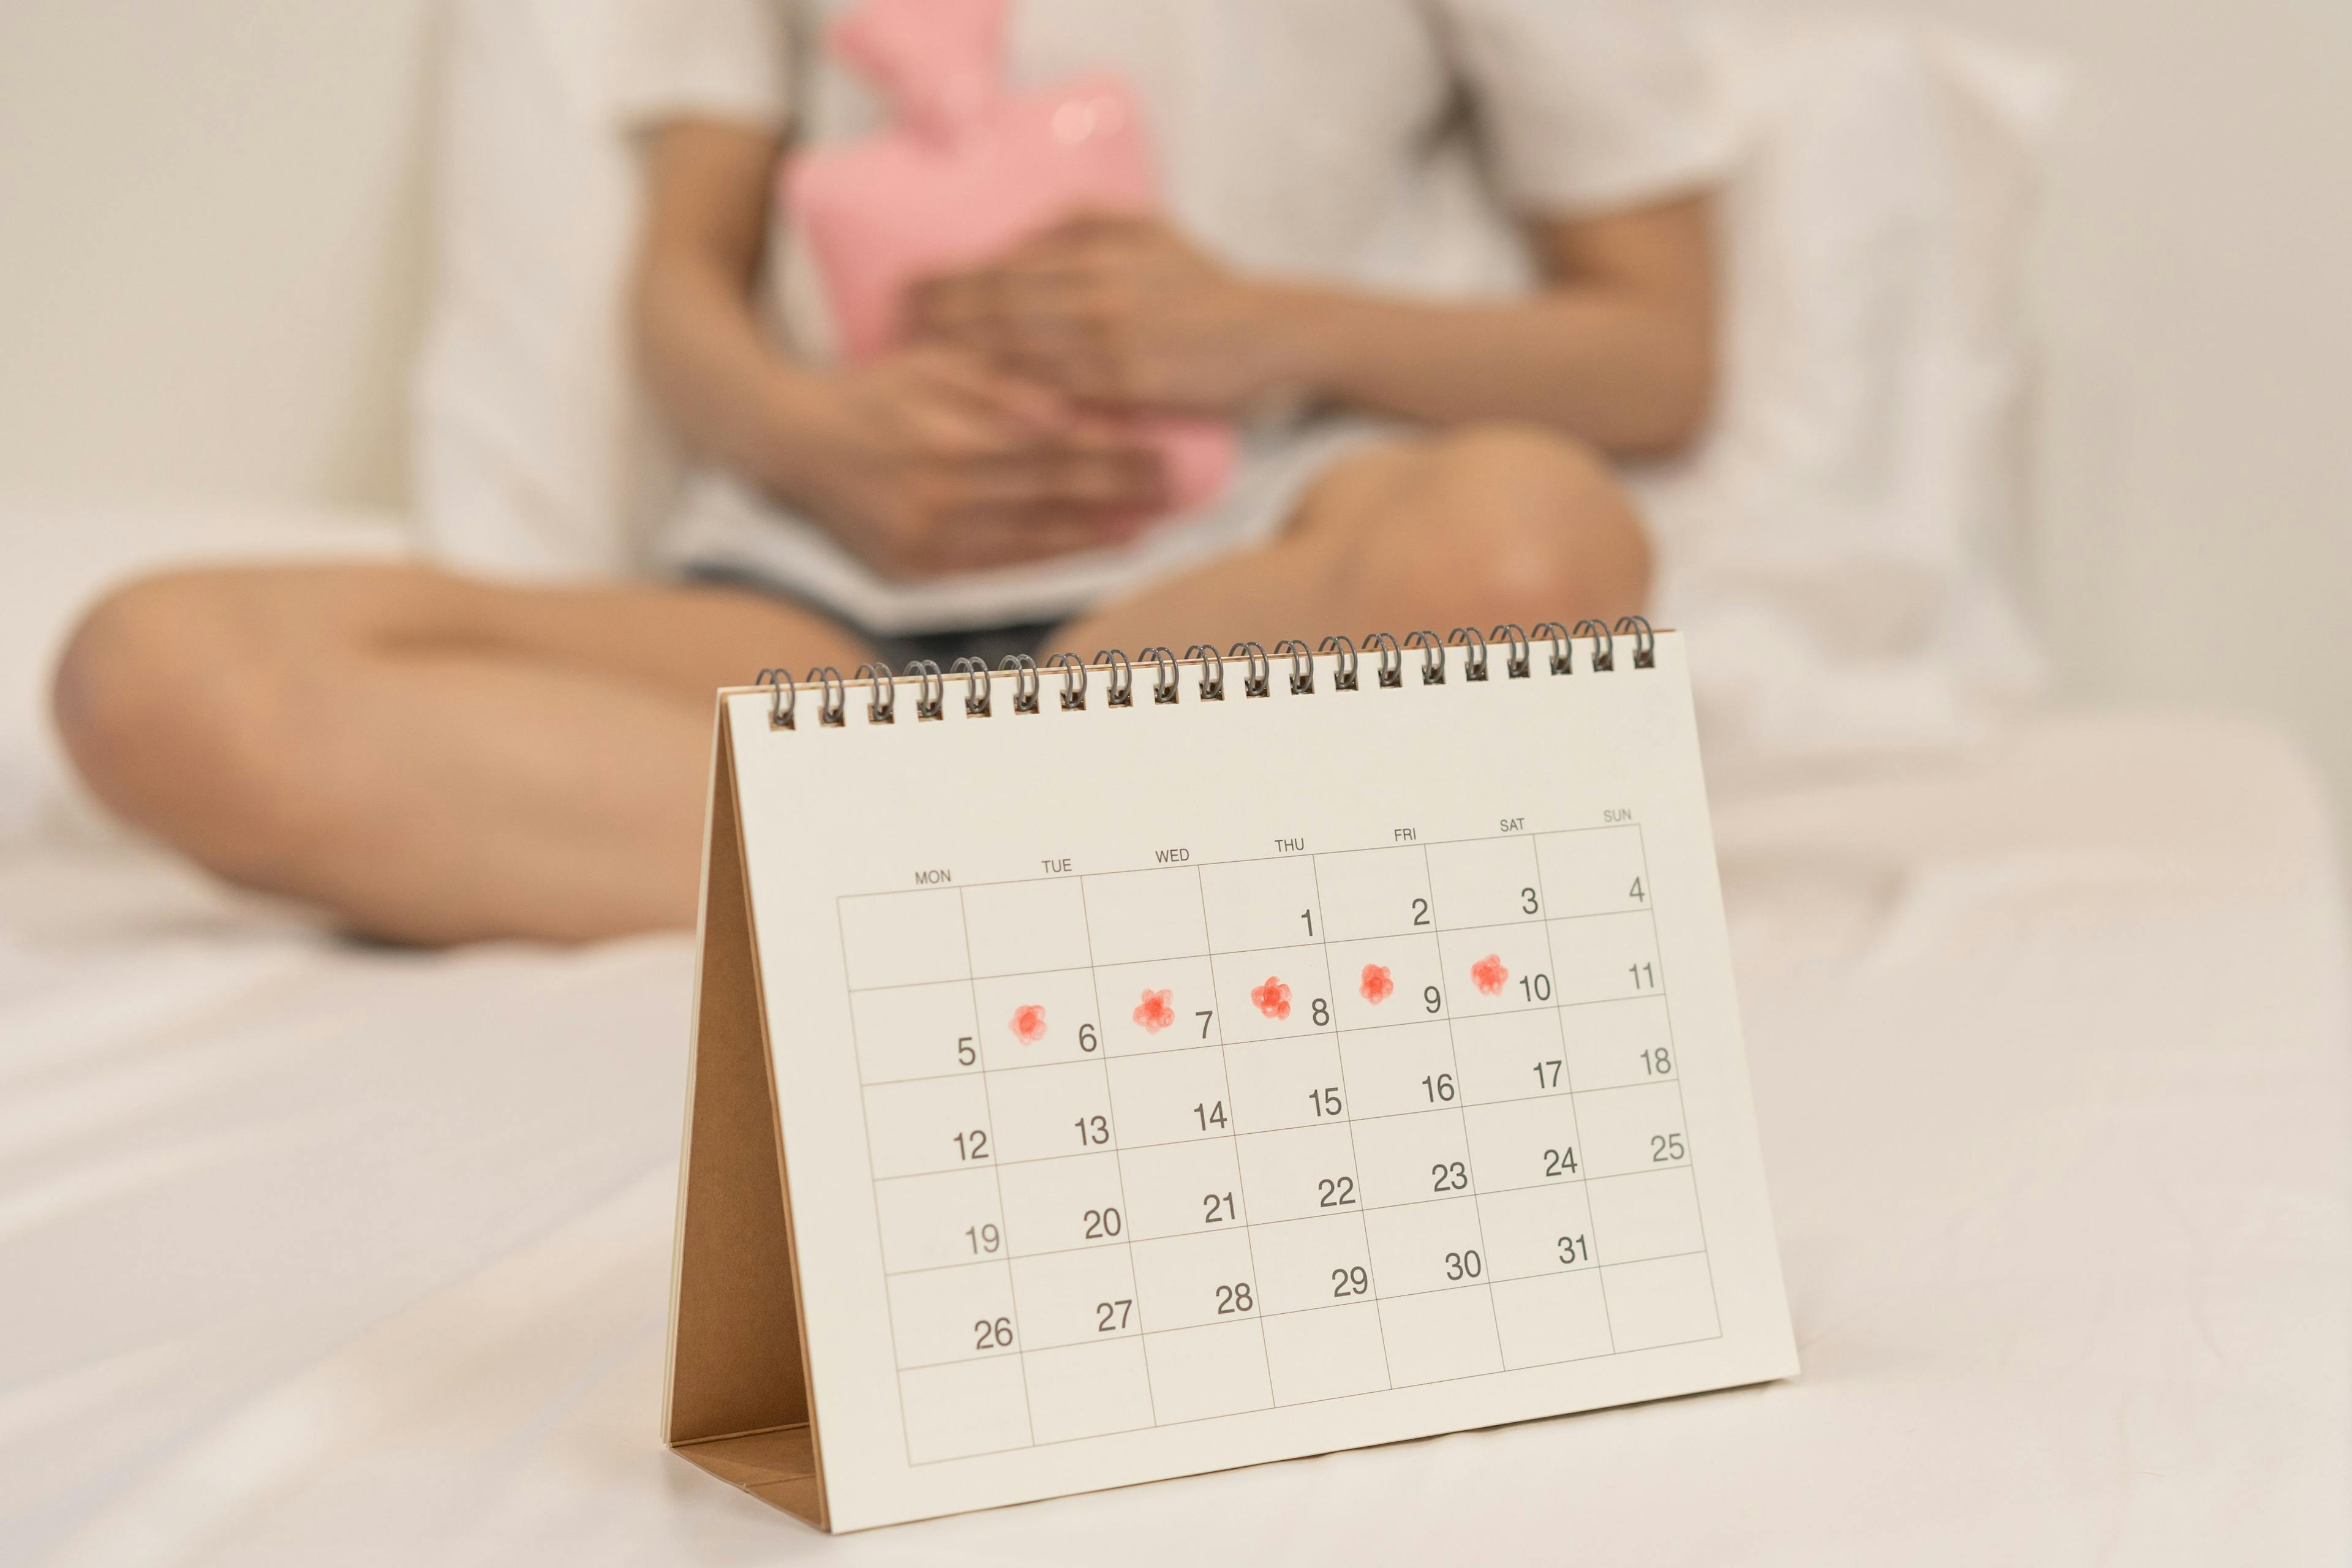 Short menstrual cycles may predict earlier menopause, worse symptoms in midlife